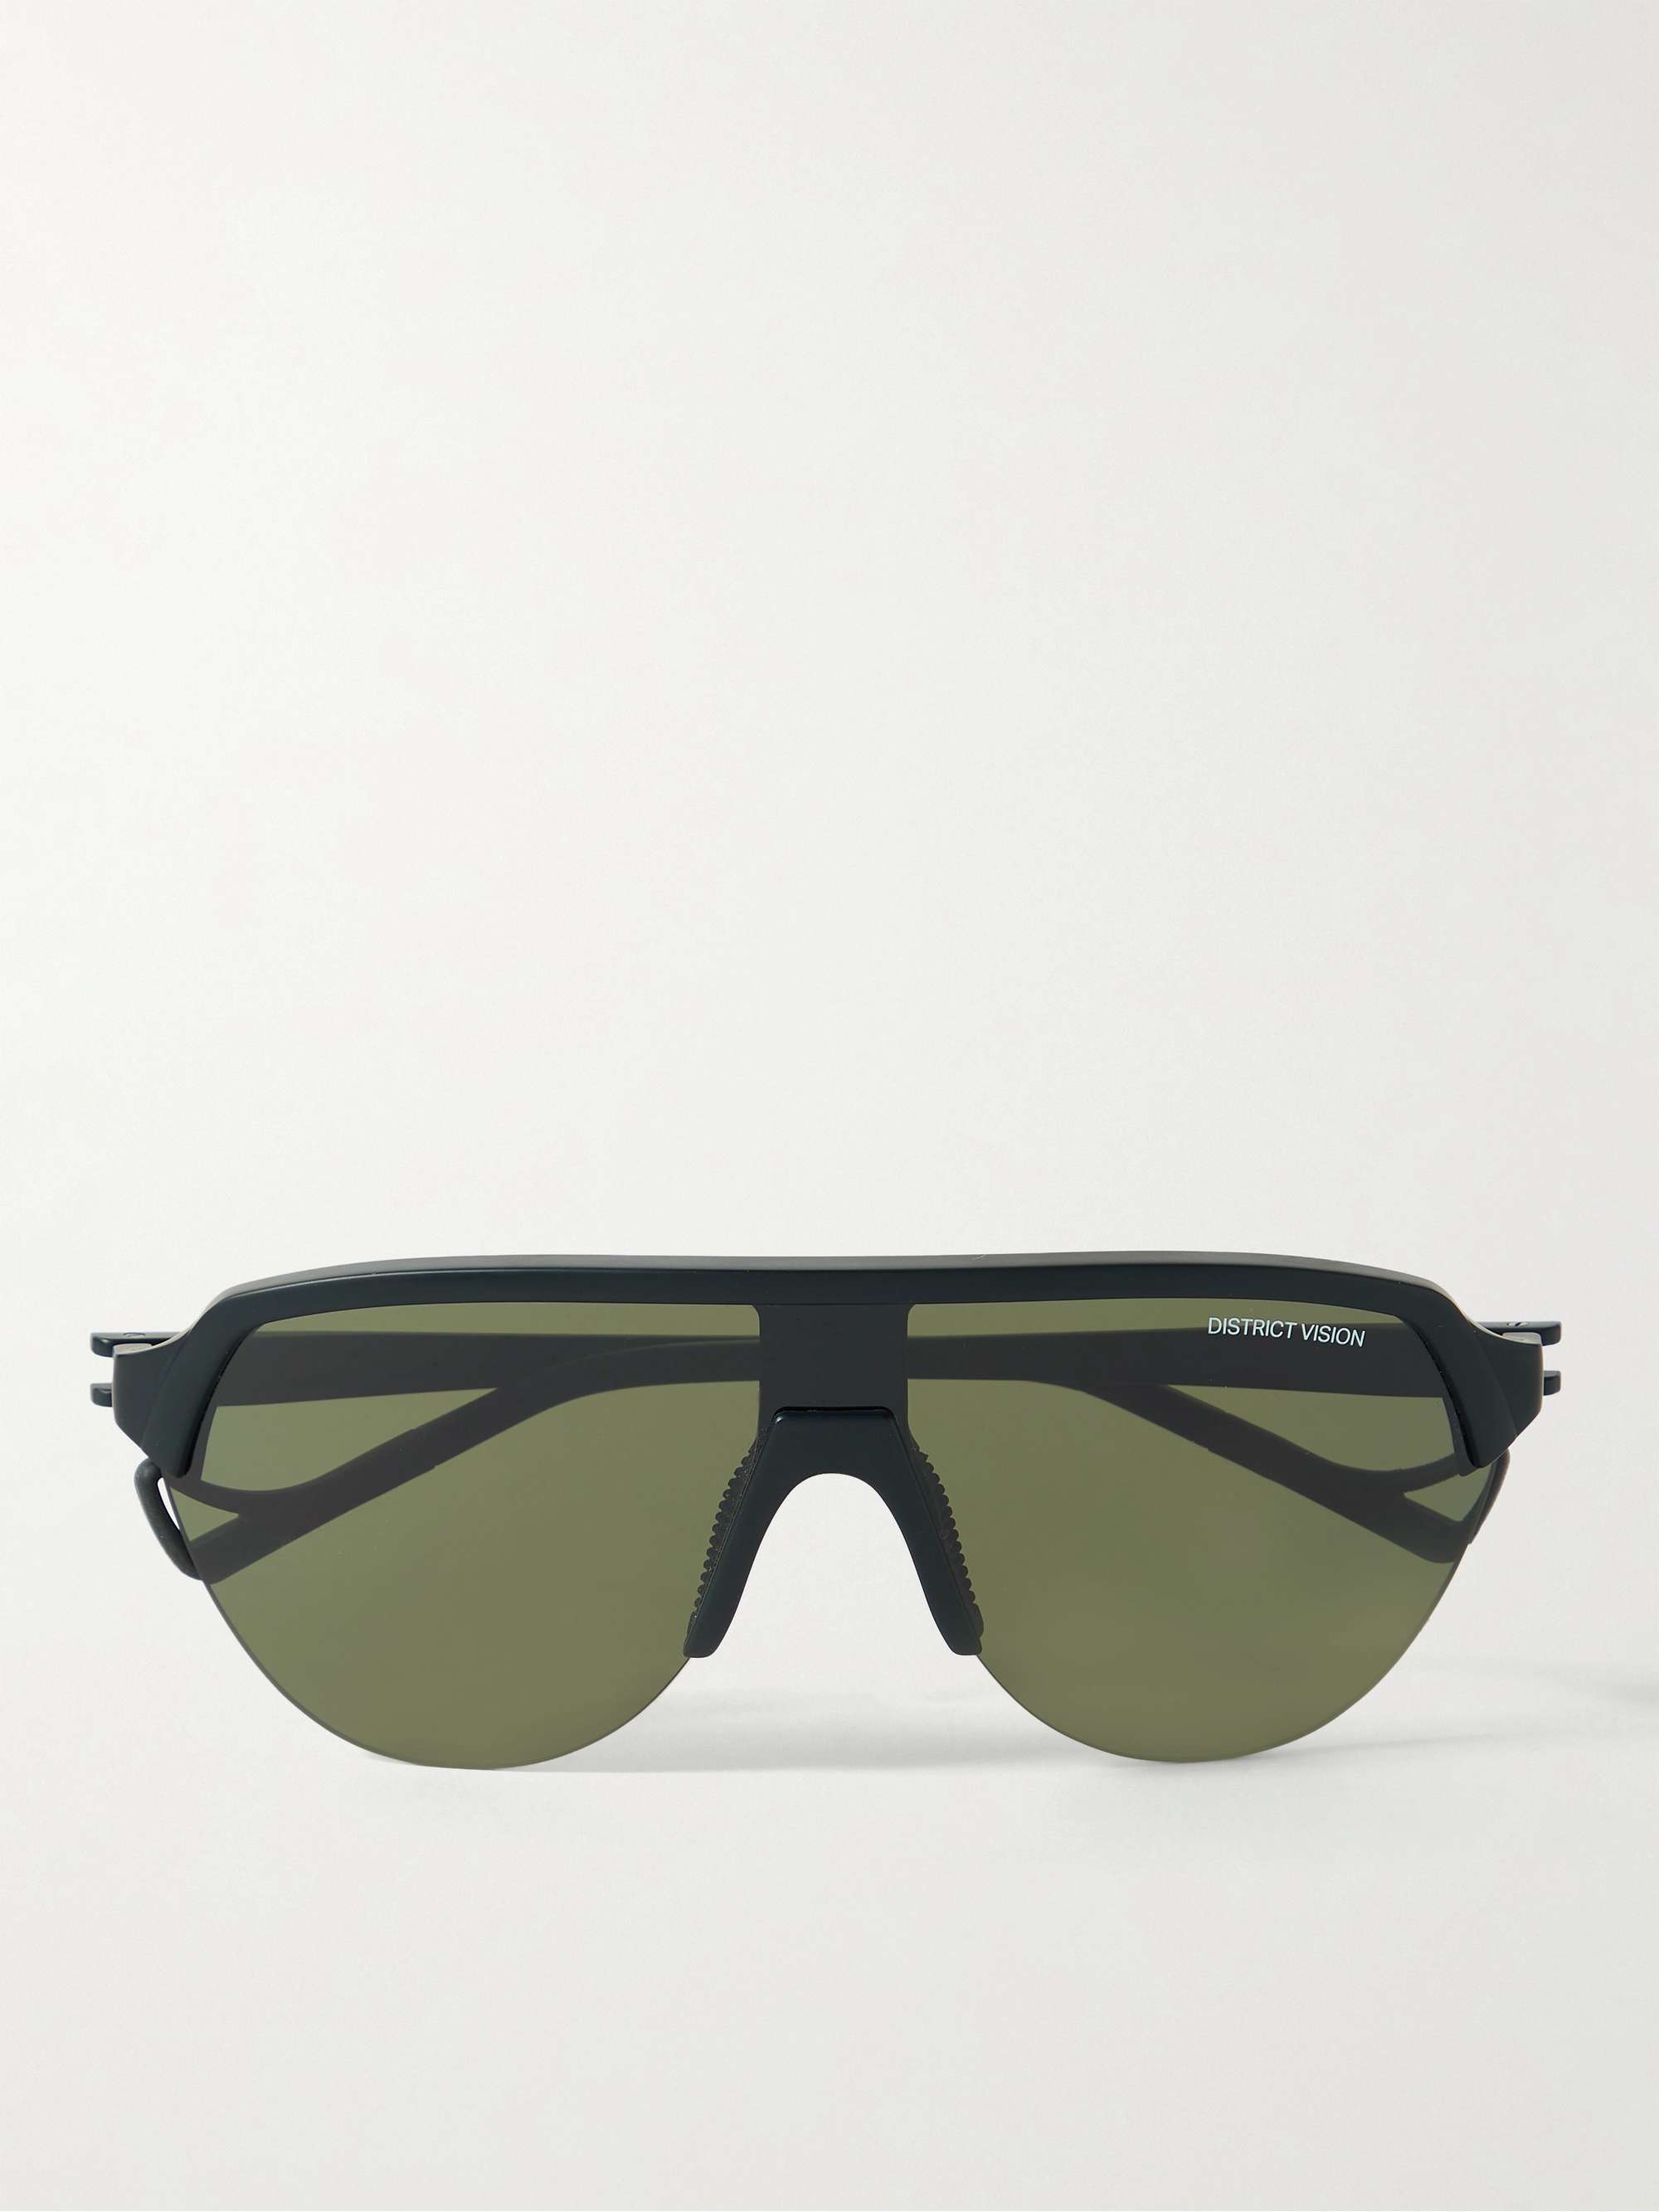 DISTRICT VISION Nagata Speed Blade Nylon and Titanium Sunglasses